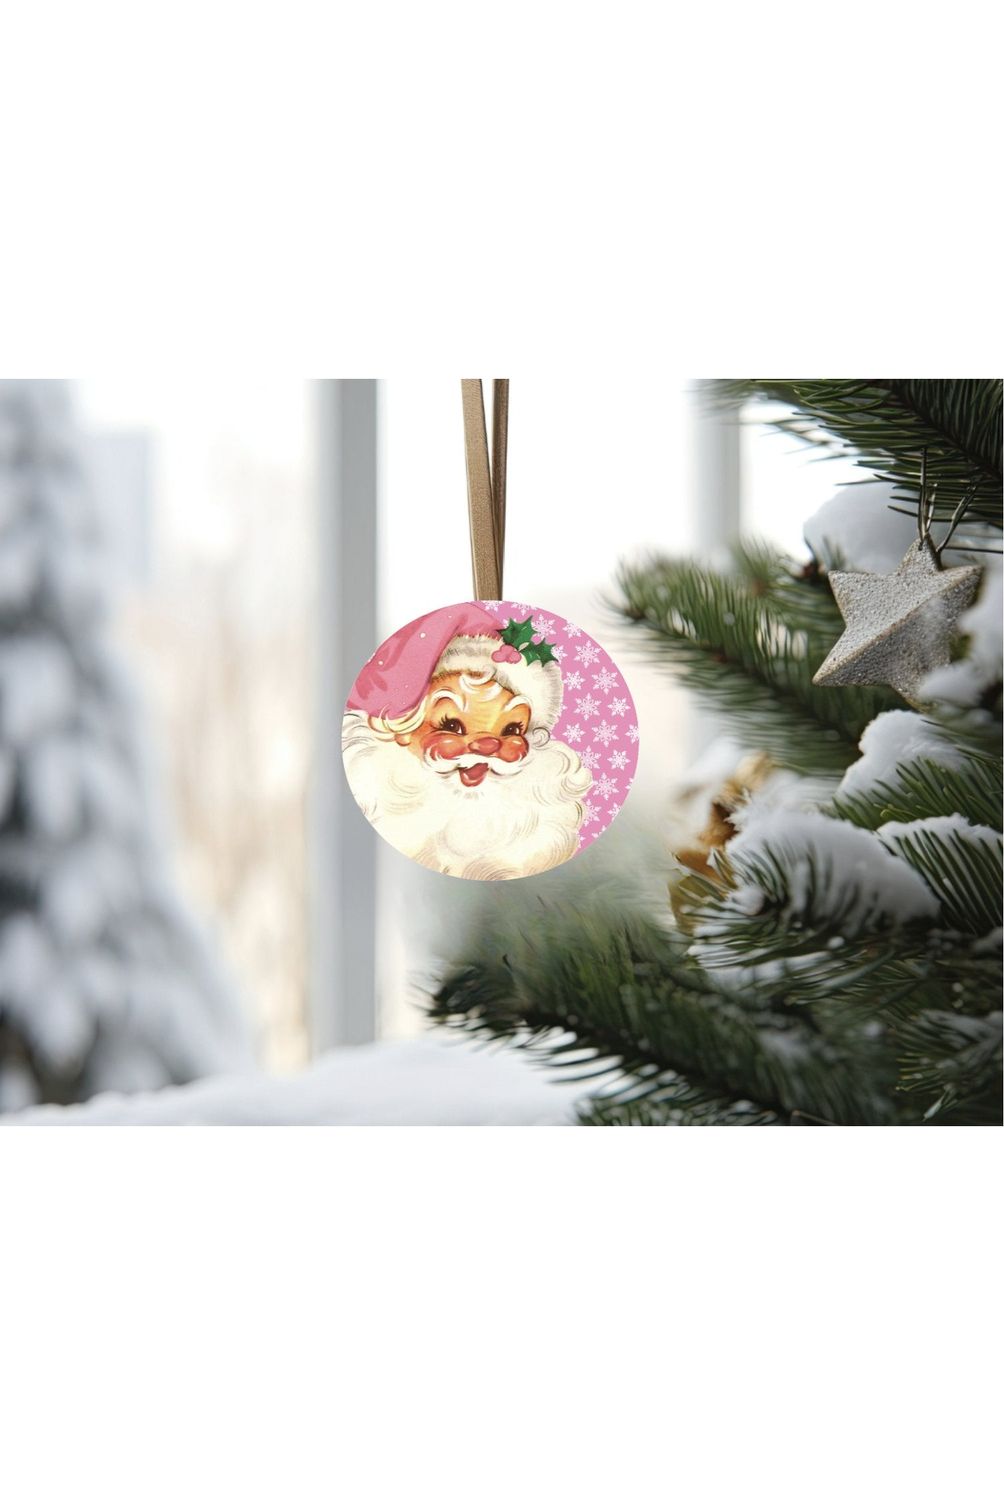 Shop For Pink Snowflakes Vintage Santa Christmas Sign - Wreath Enhancement